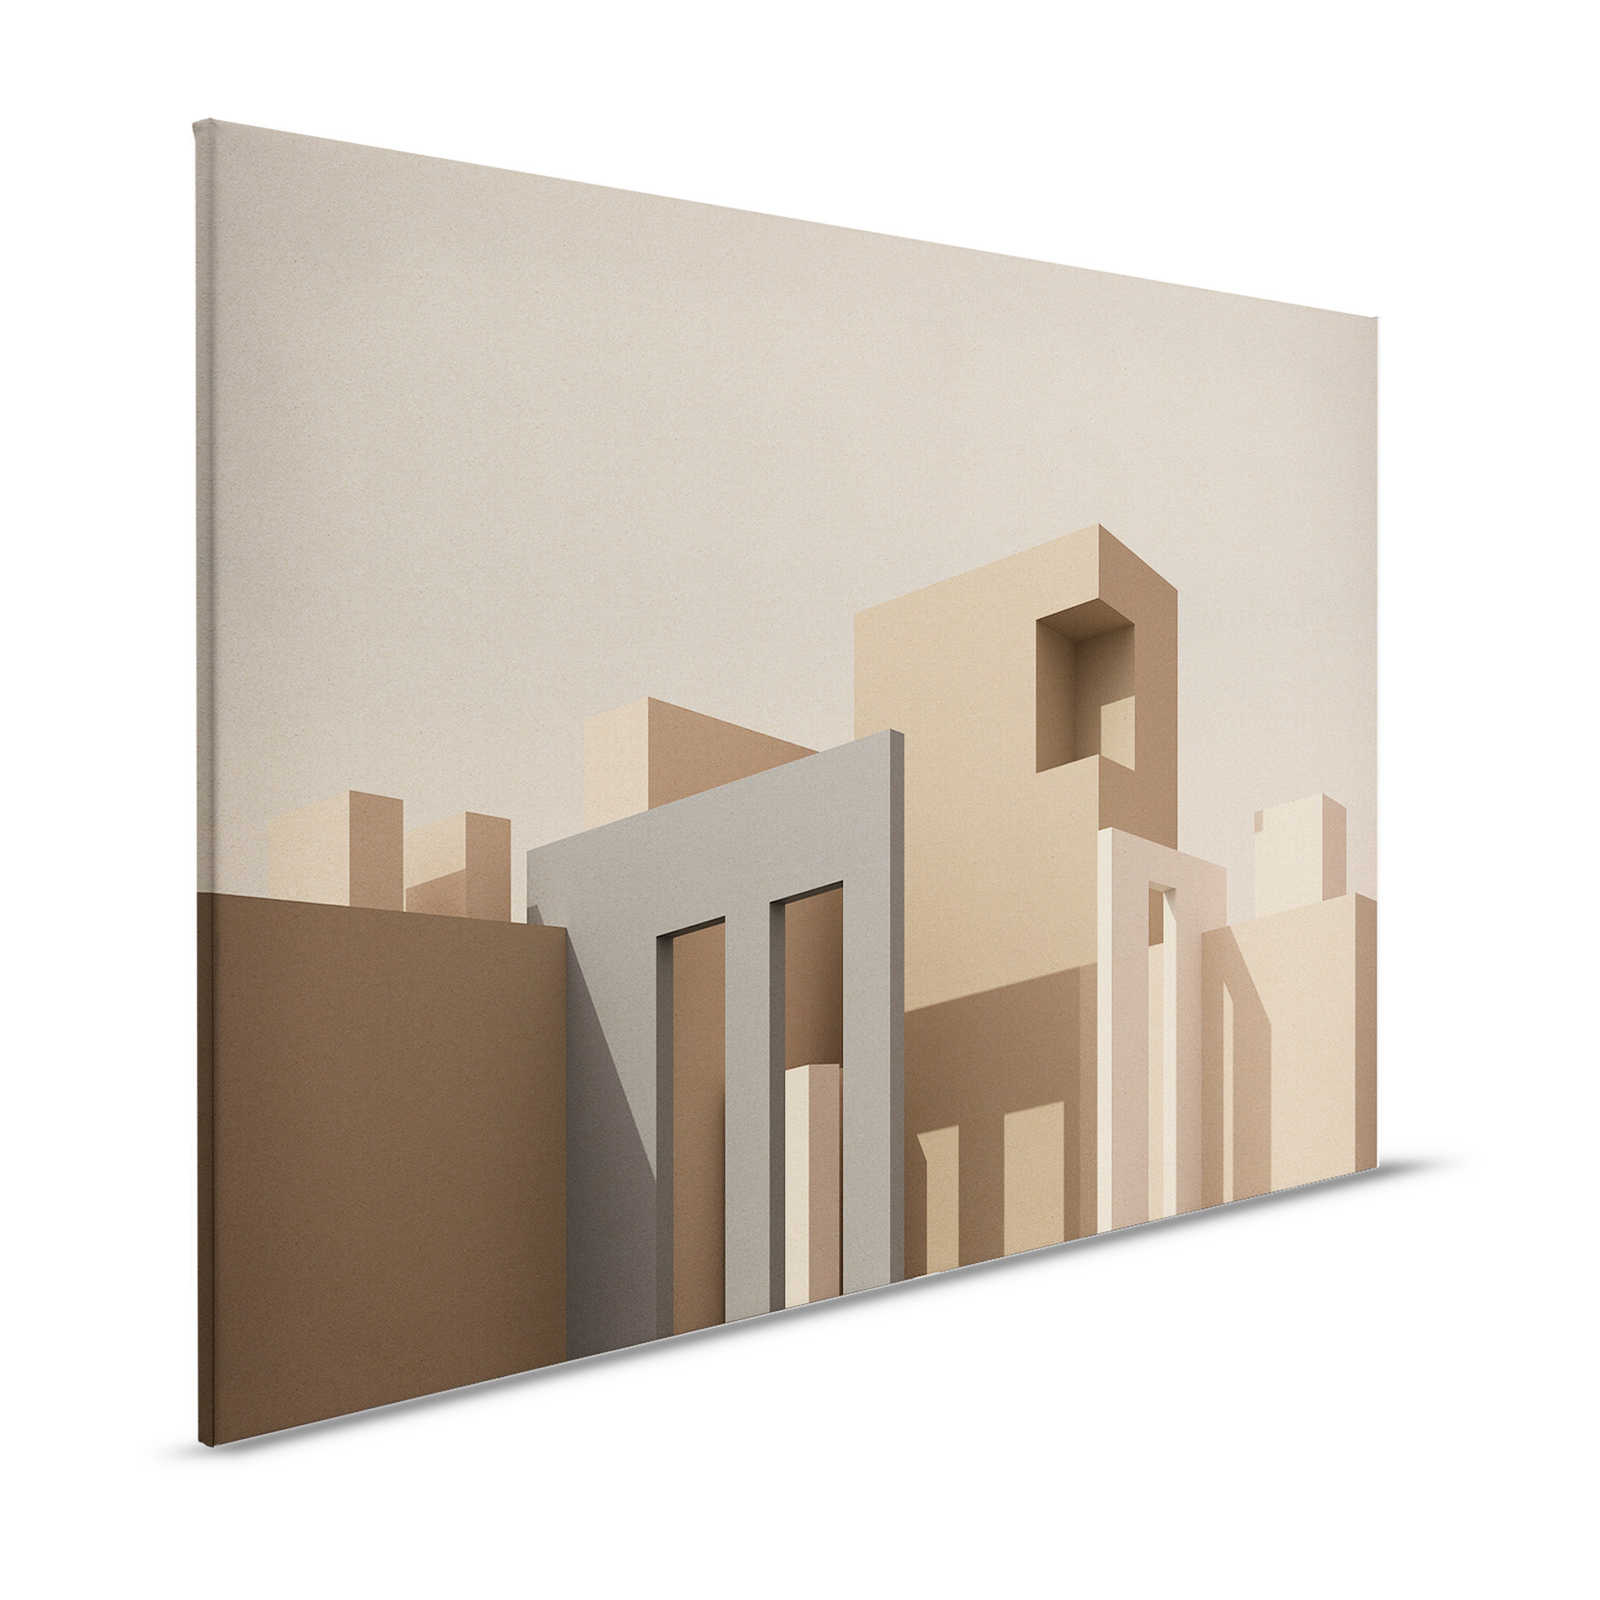 Tanger 1 - Canvas schilderij Architecture Cube Design in Beige & Grijs - 1.20 m x 0.80 m
